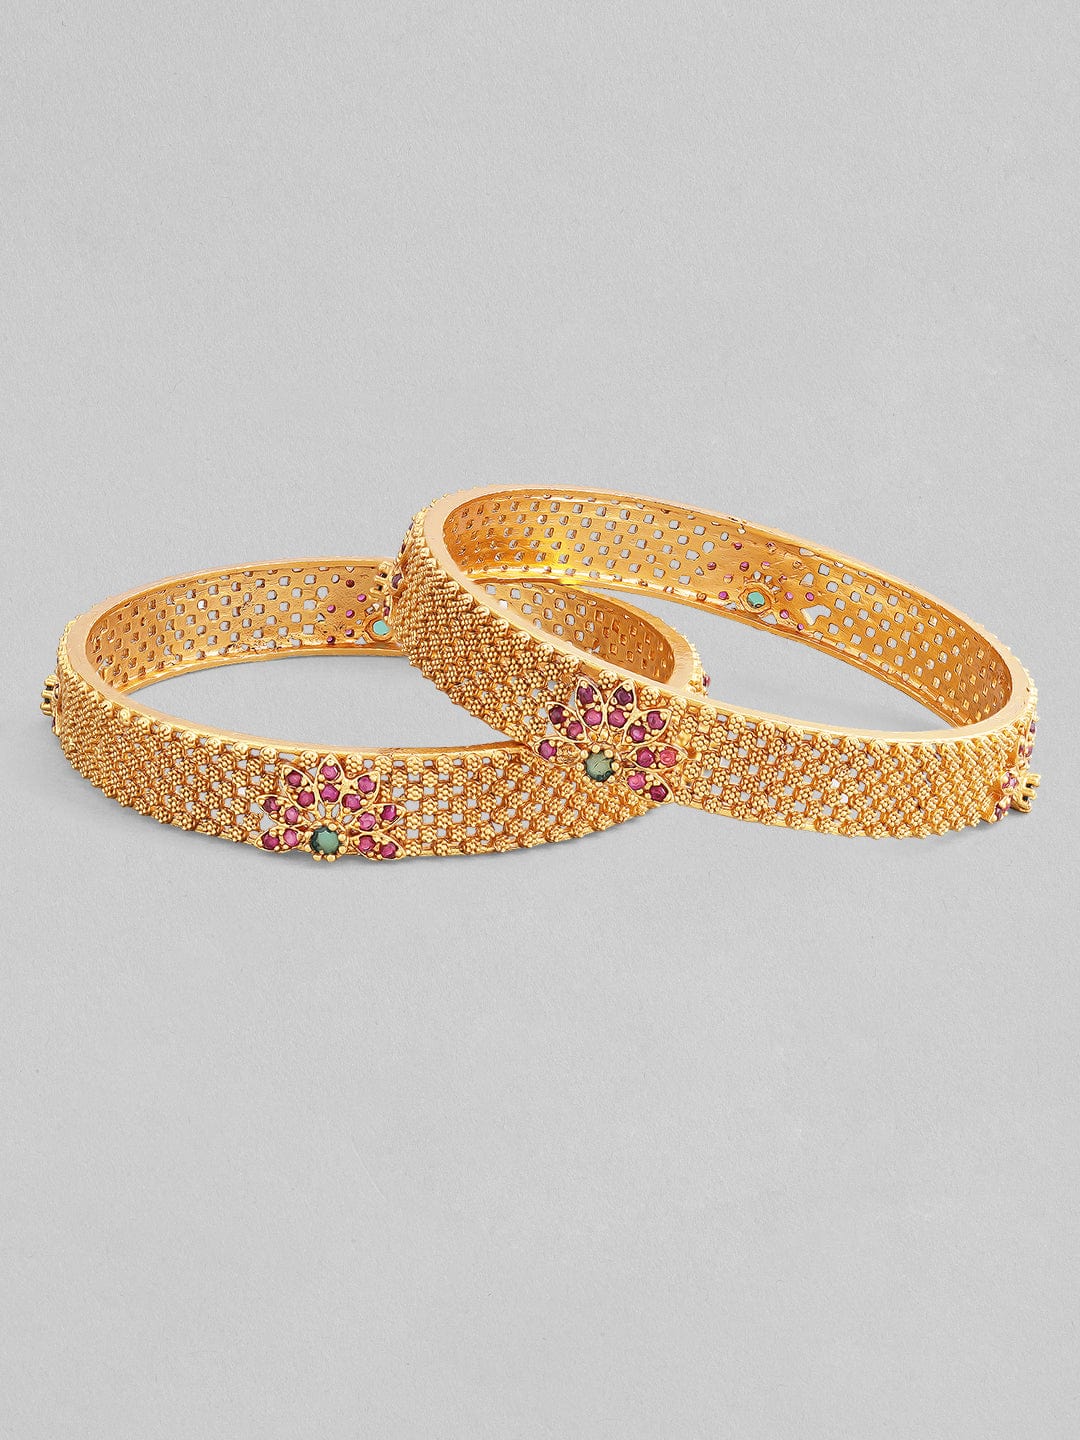 22 Karat Gold Bracelet - brla21803 - 22K Gold bracelet for ladies. Bracelet  is beaded with gold balls in an alternate pattern with two to